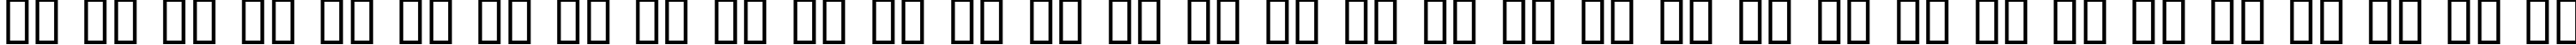 Пример написания русского алфавита шрифтом Campanile